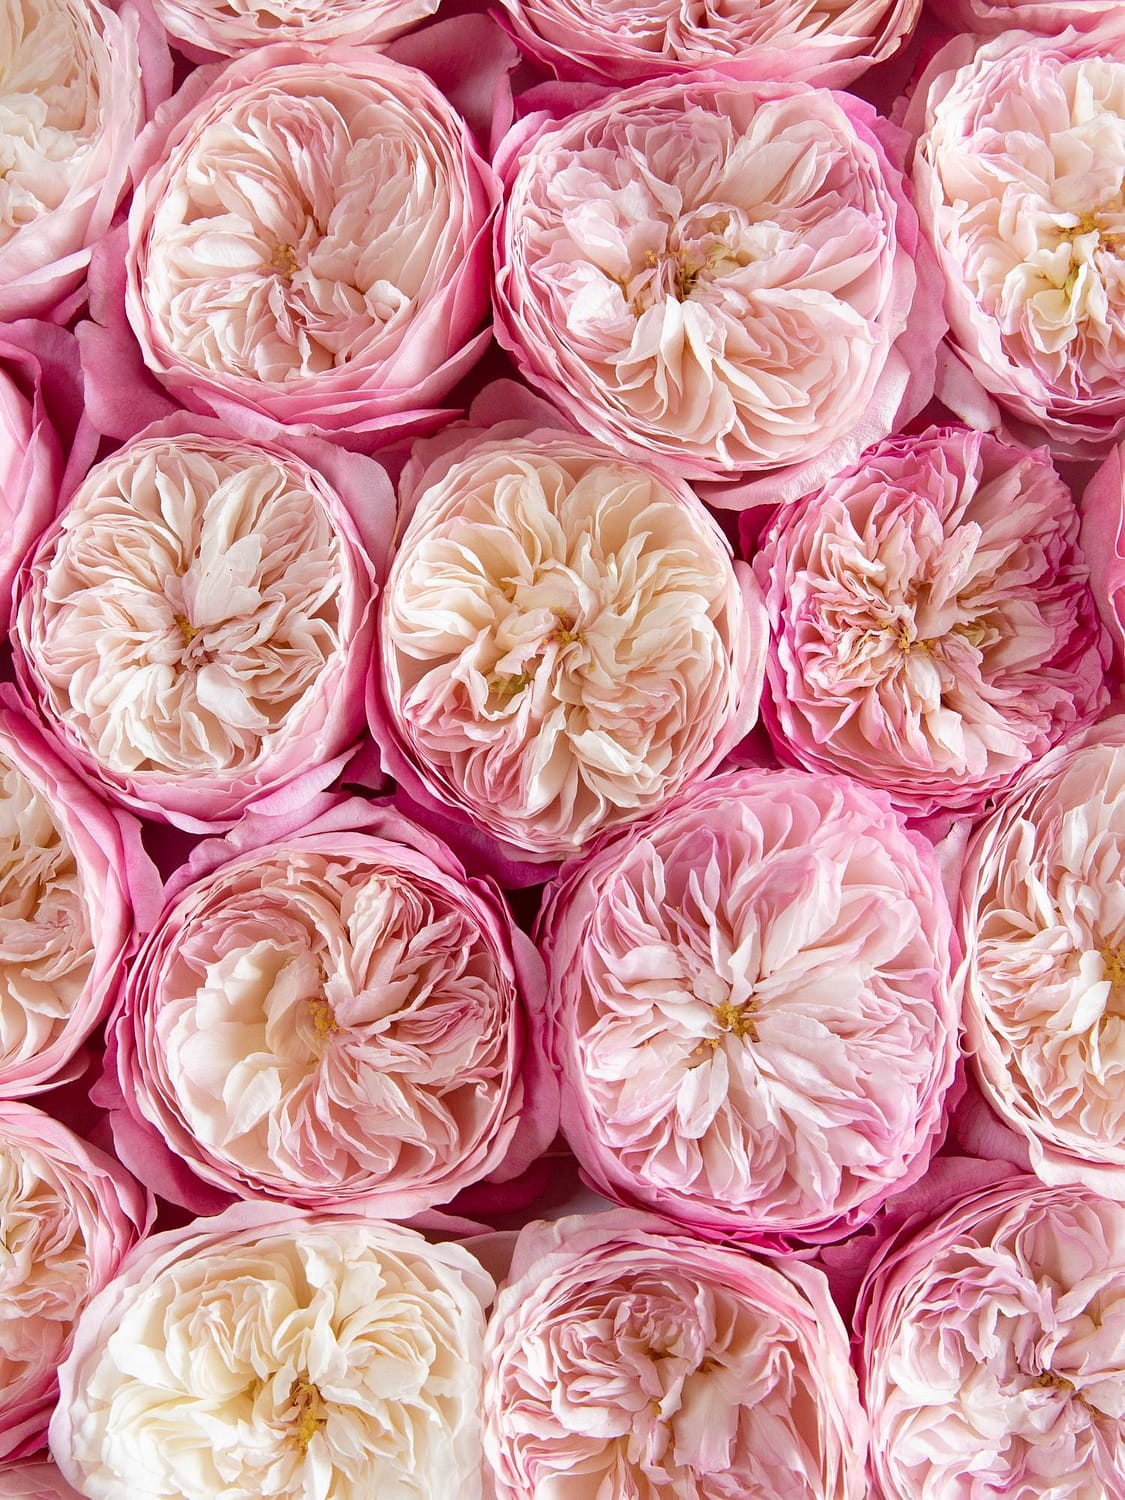 Pink Open Blooms Of David Austin Wedding Roses